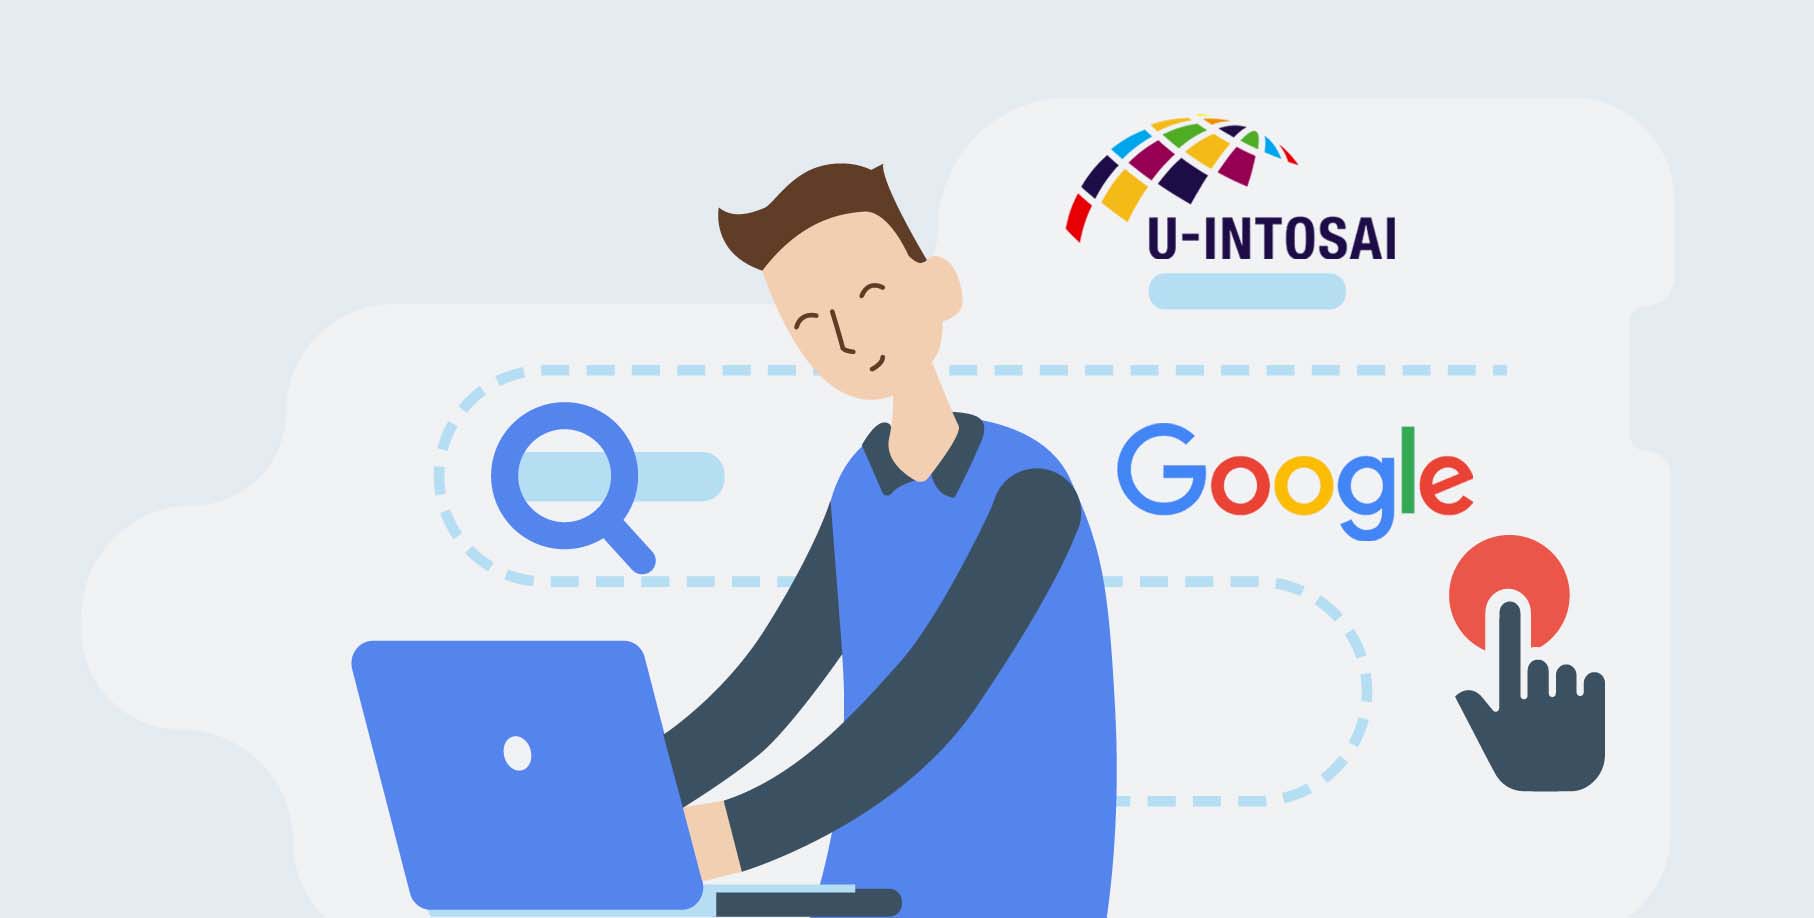 Топ-курсы от Google на U-INTOSAI